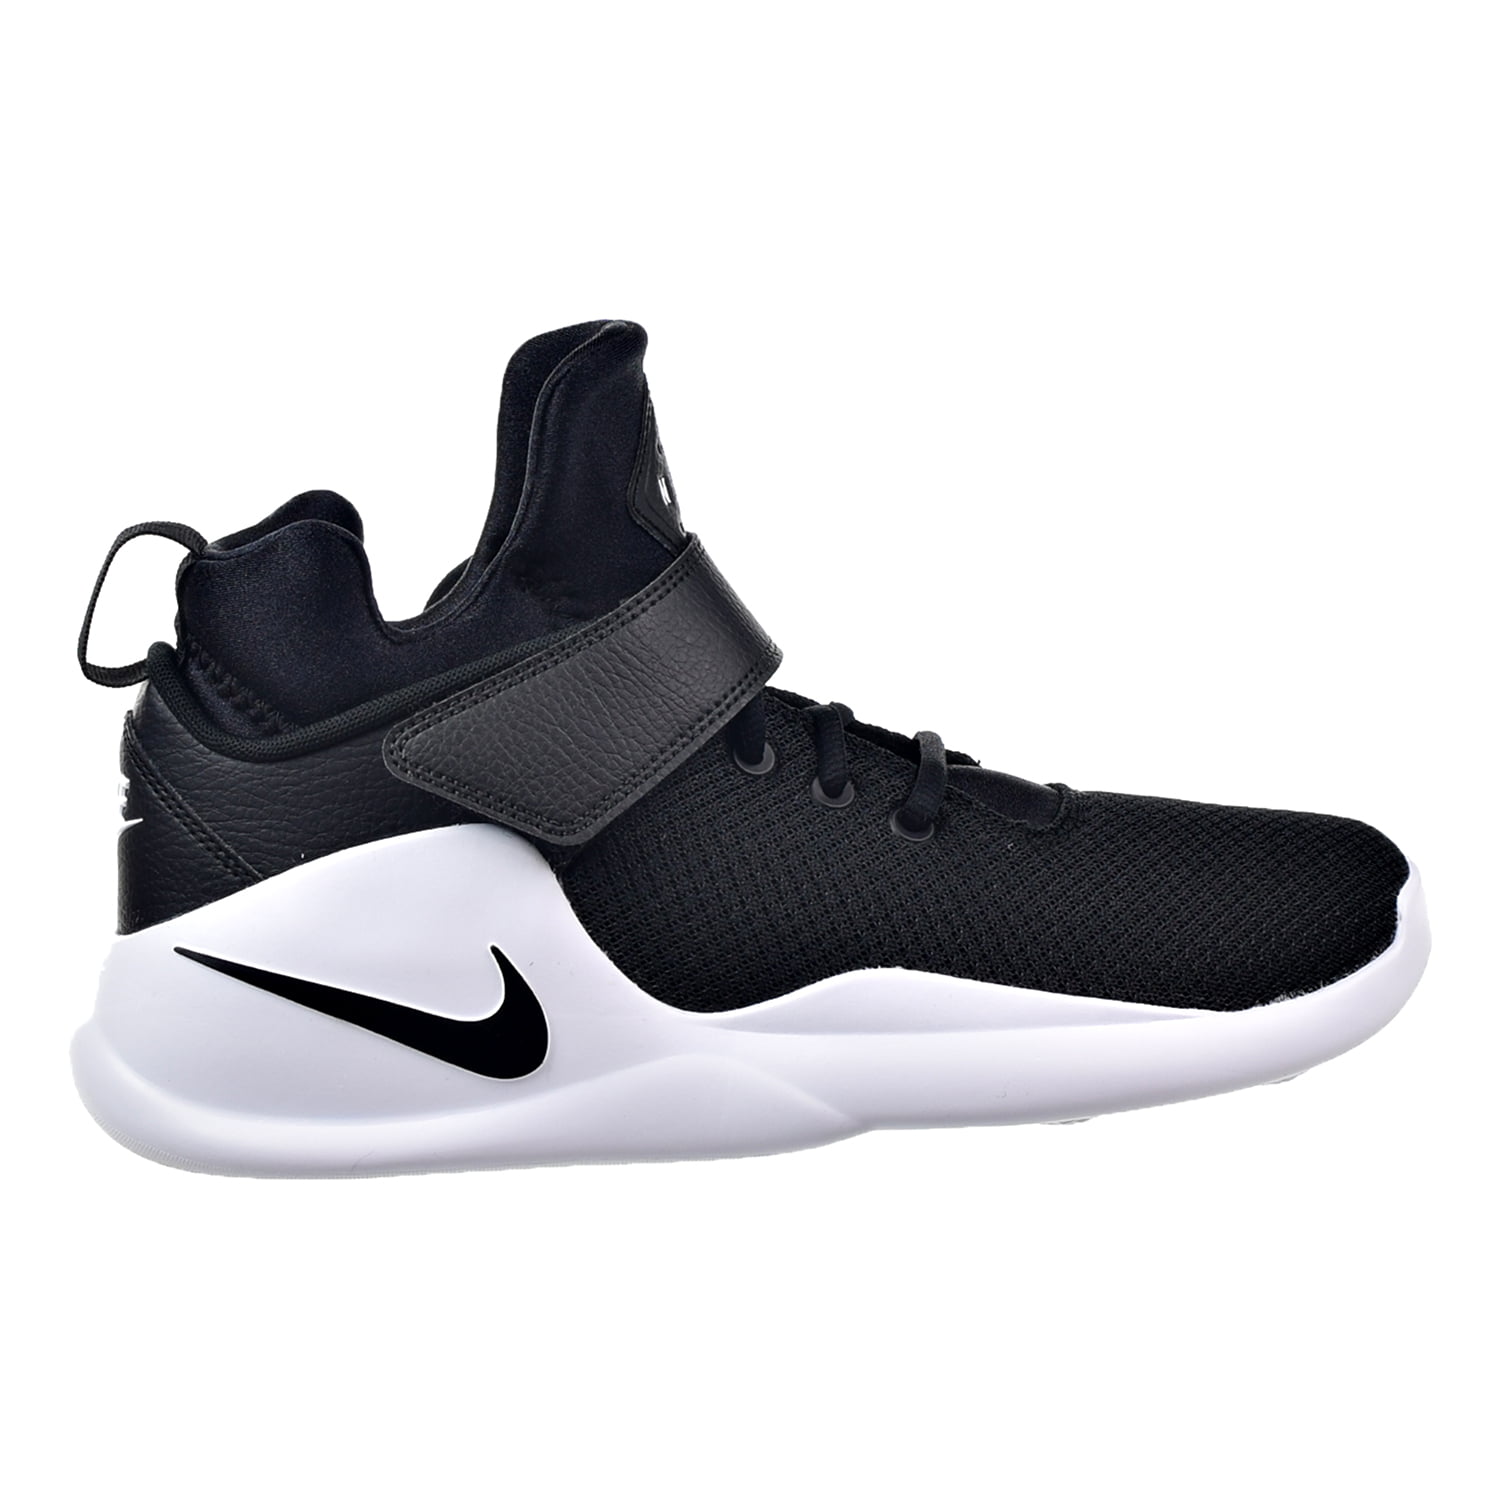 Complaciente Editor Pef Nike Kwazi Men's Shoe Black/White 844839-002 - Walmart.com